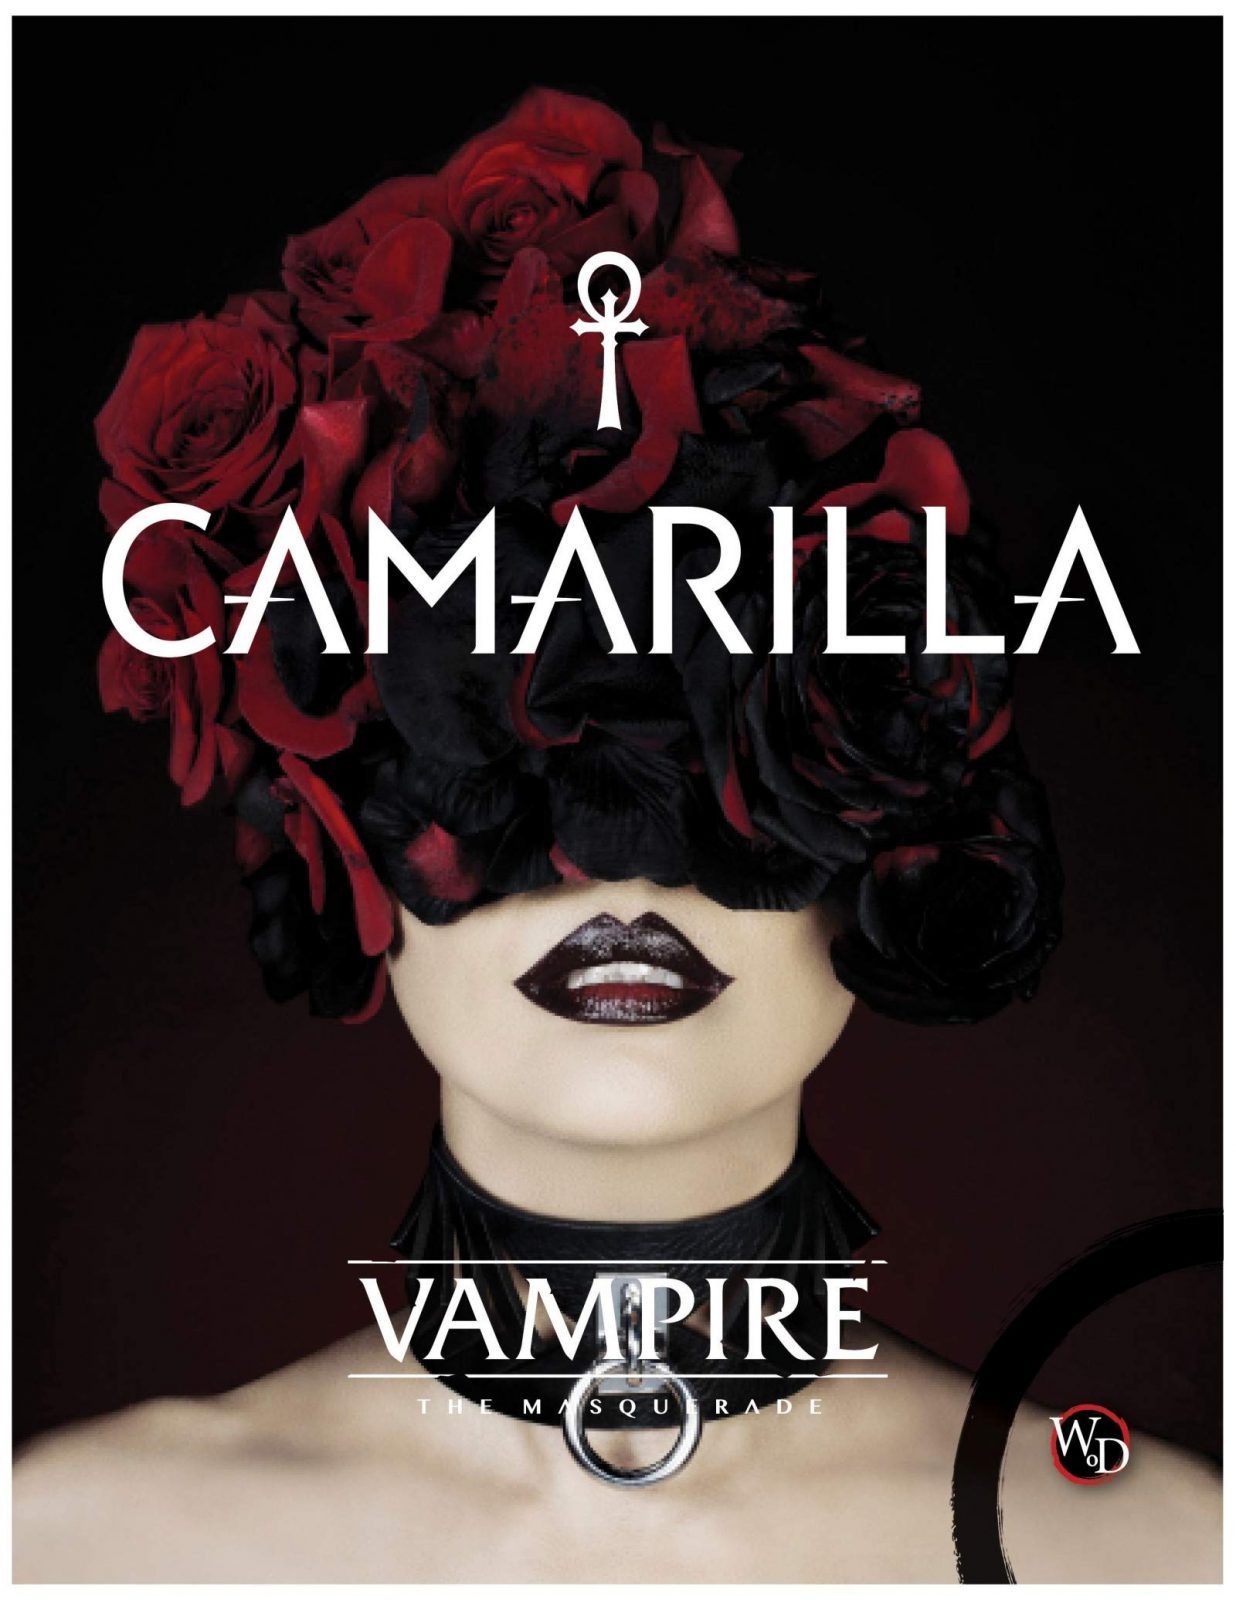 Modiphius Entertainment Vampire: The Masquerade 5th Edition Camarilla